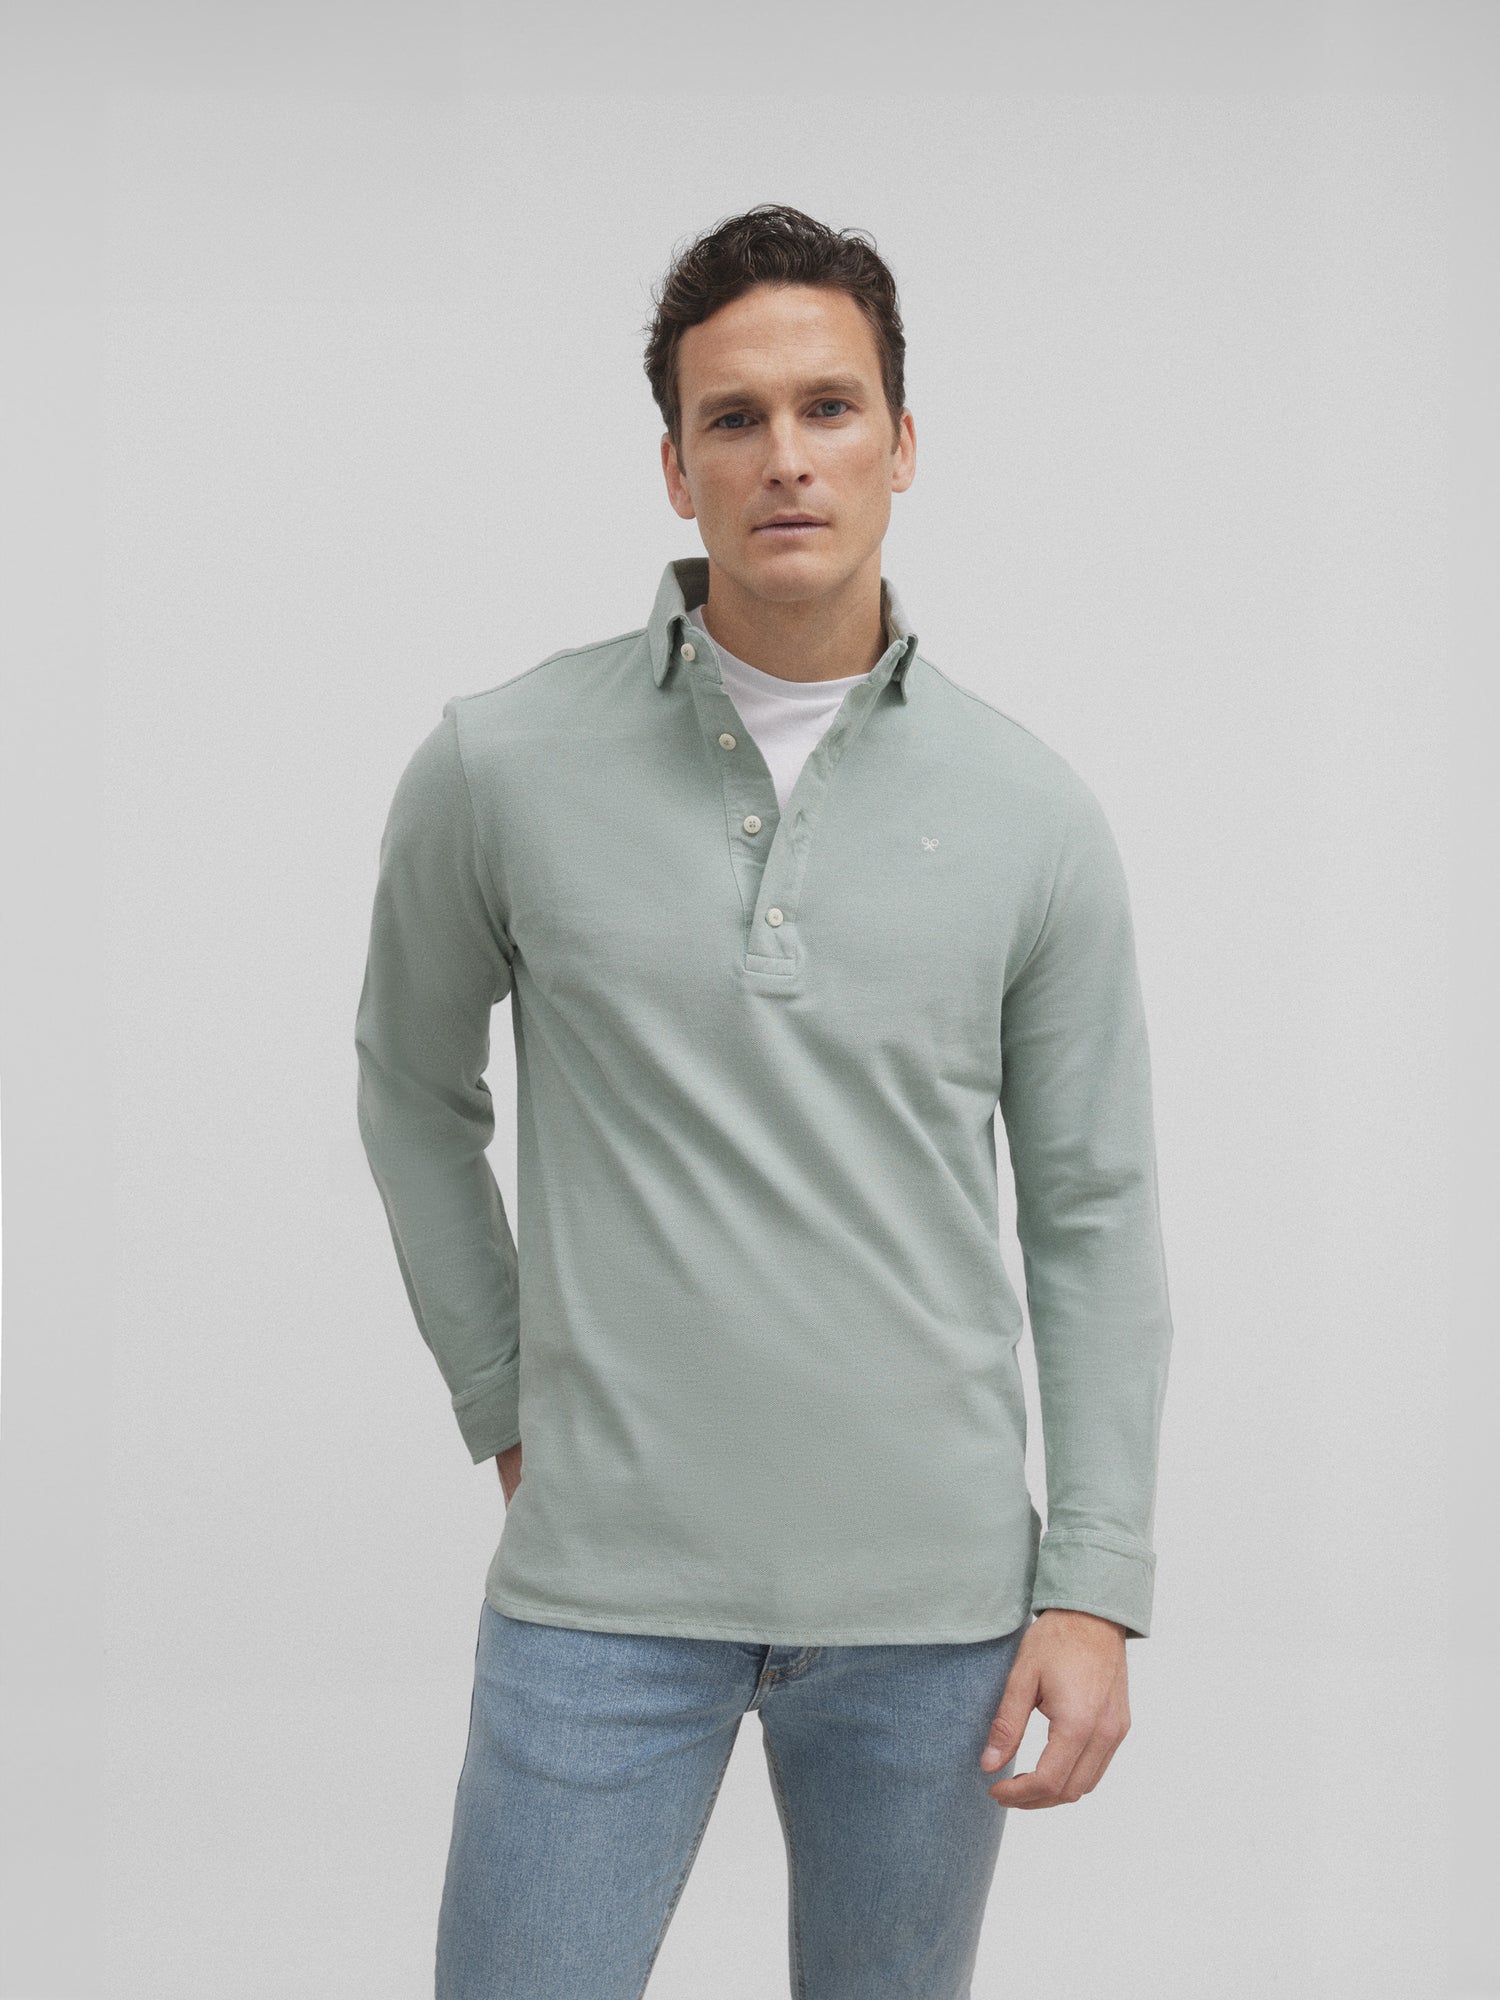 Medium green long sleeve plain polo shirt